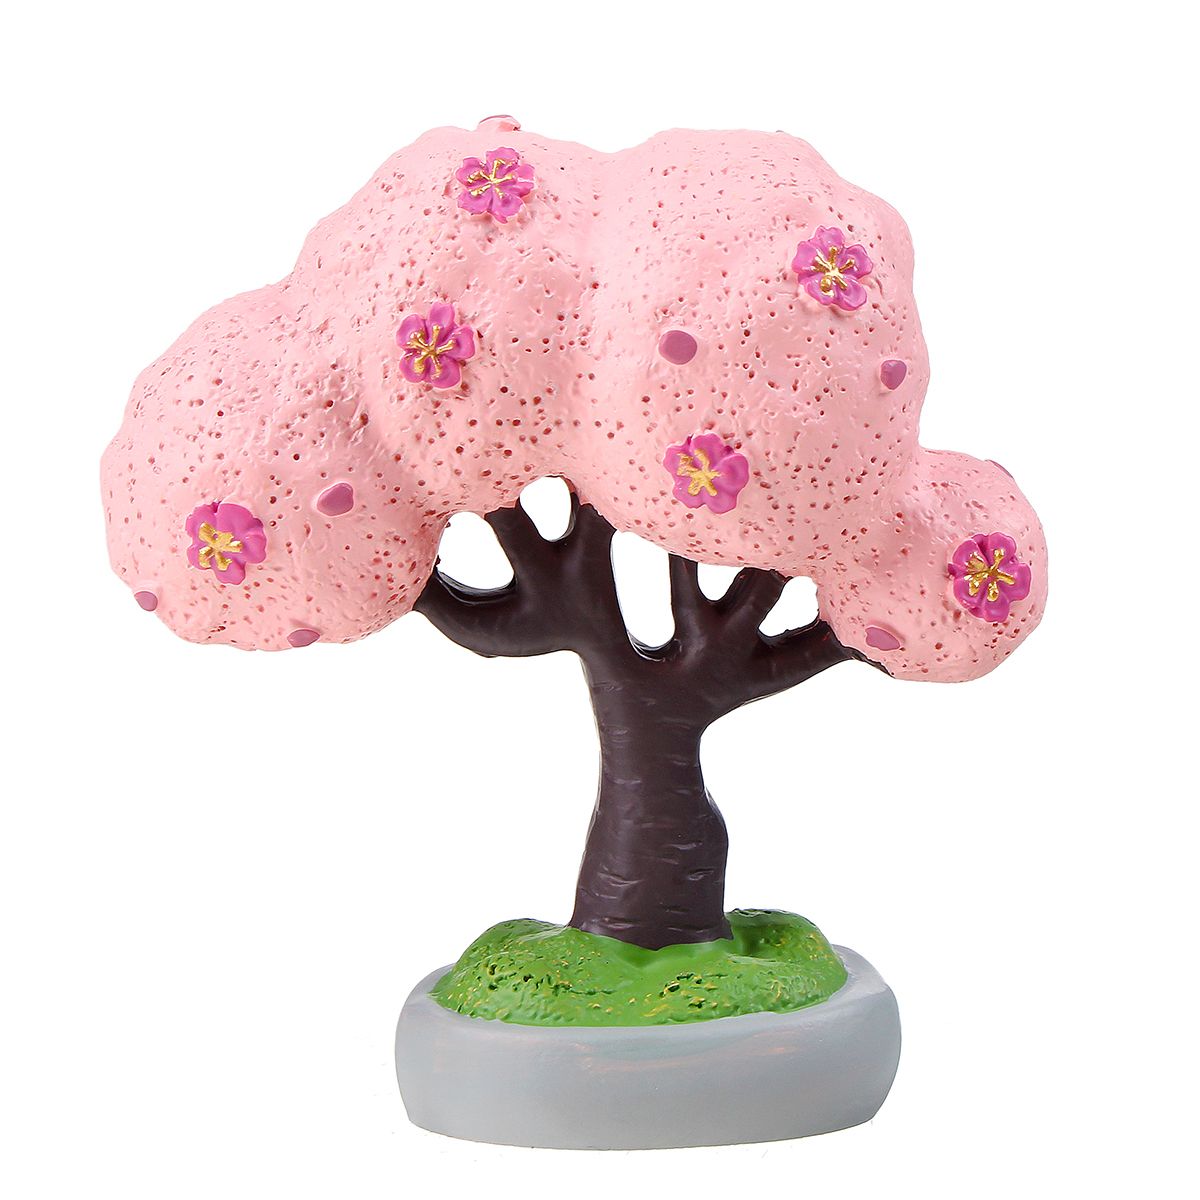 Resin-Sakura-Micro-Landscape-Tabletop-Miniature-Garden-DIY-Dollhouse-Decorations-1629699